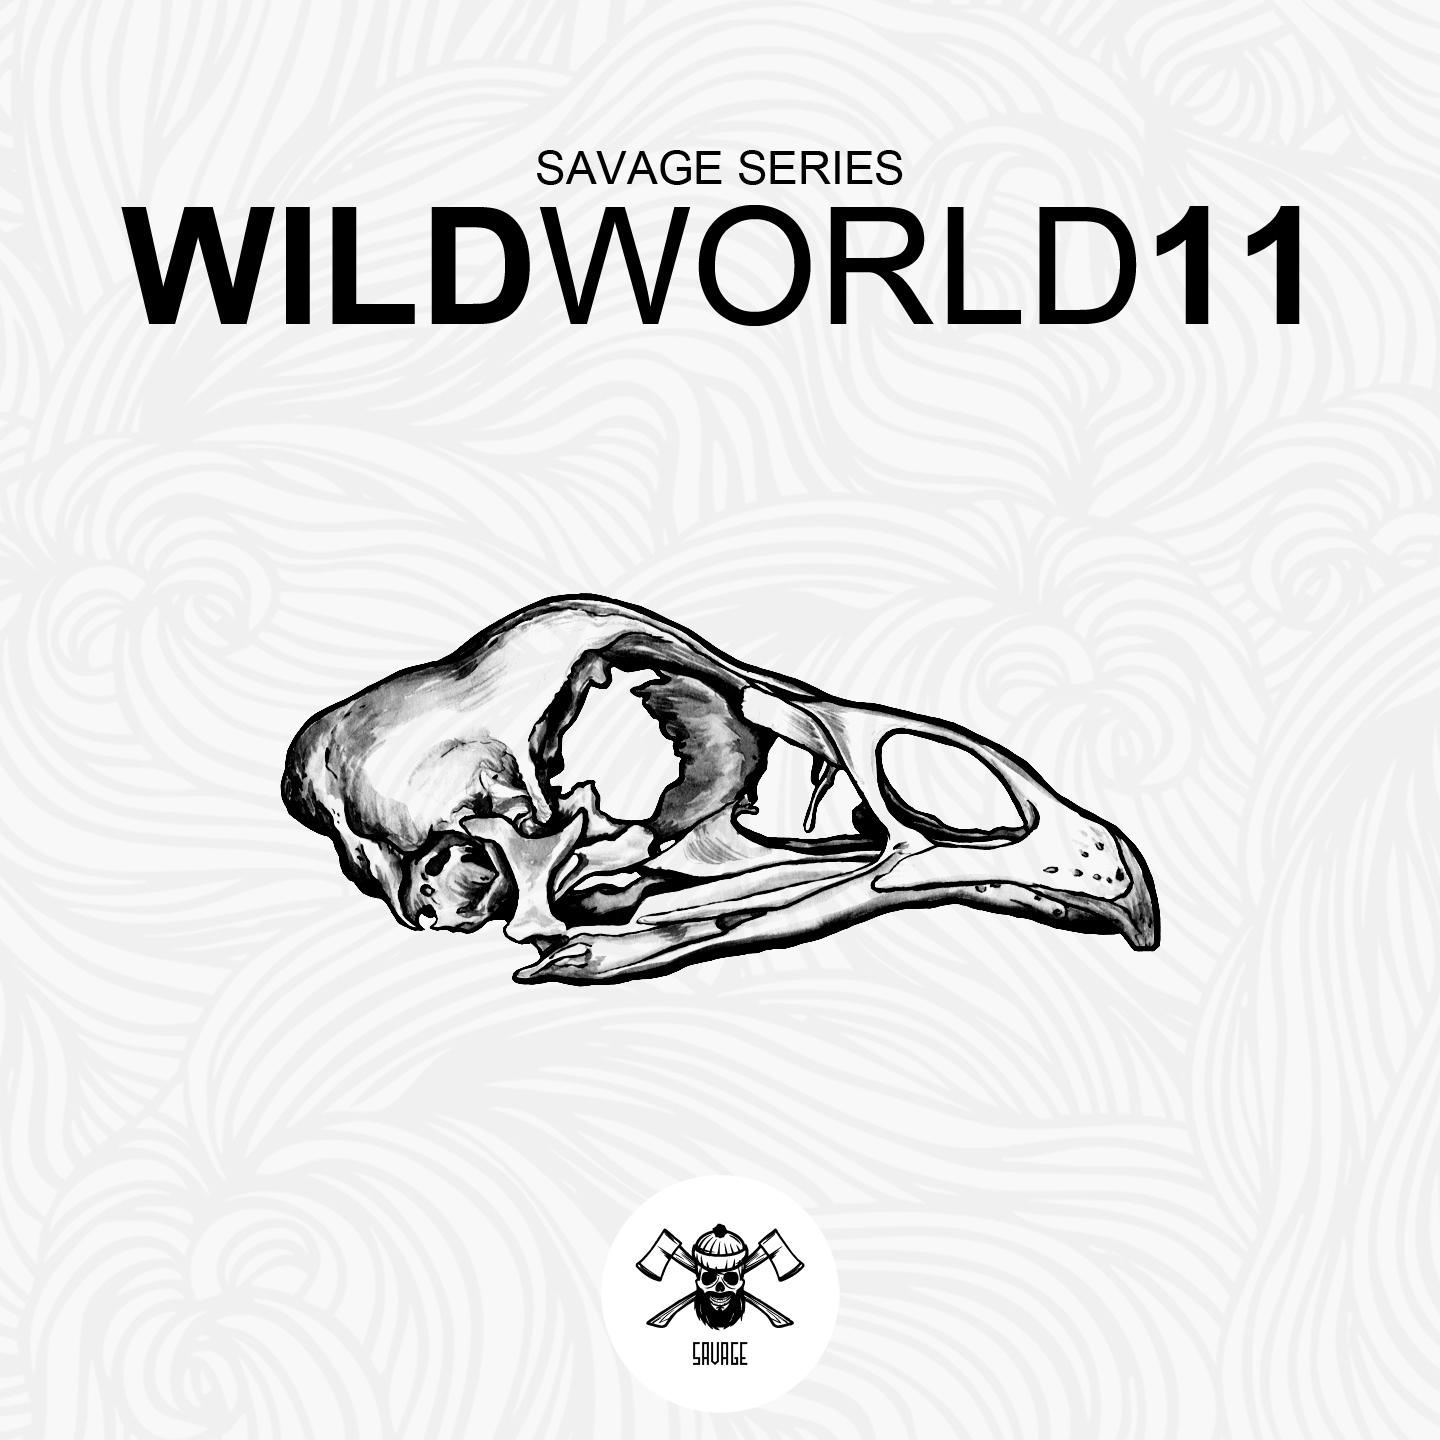 WildWorld11 (Savage Series)